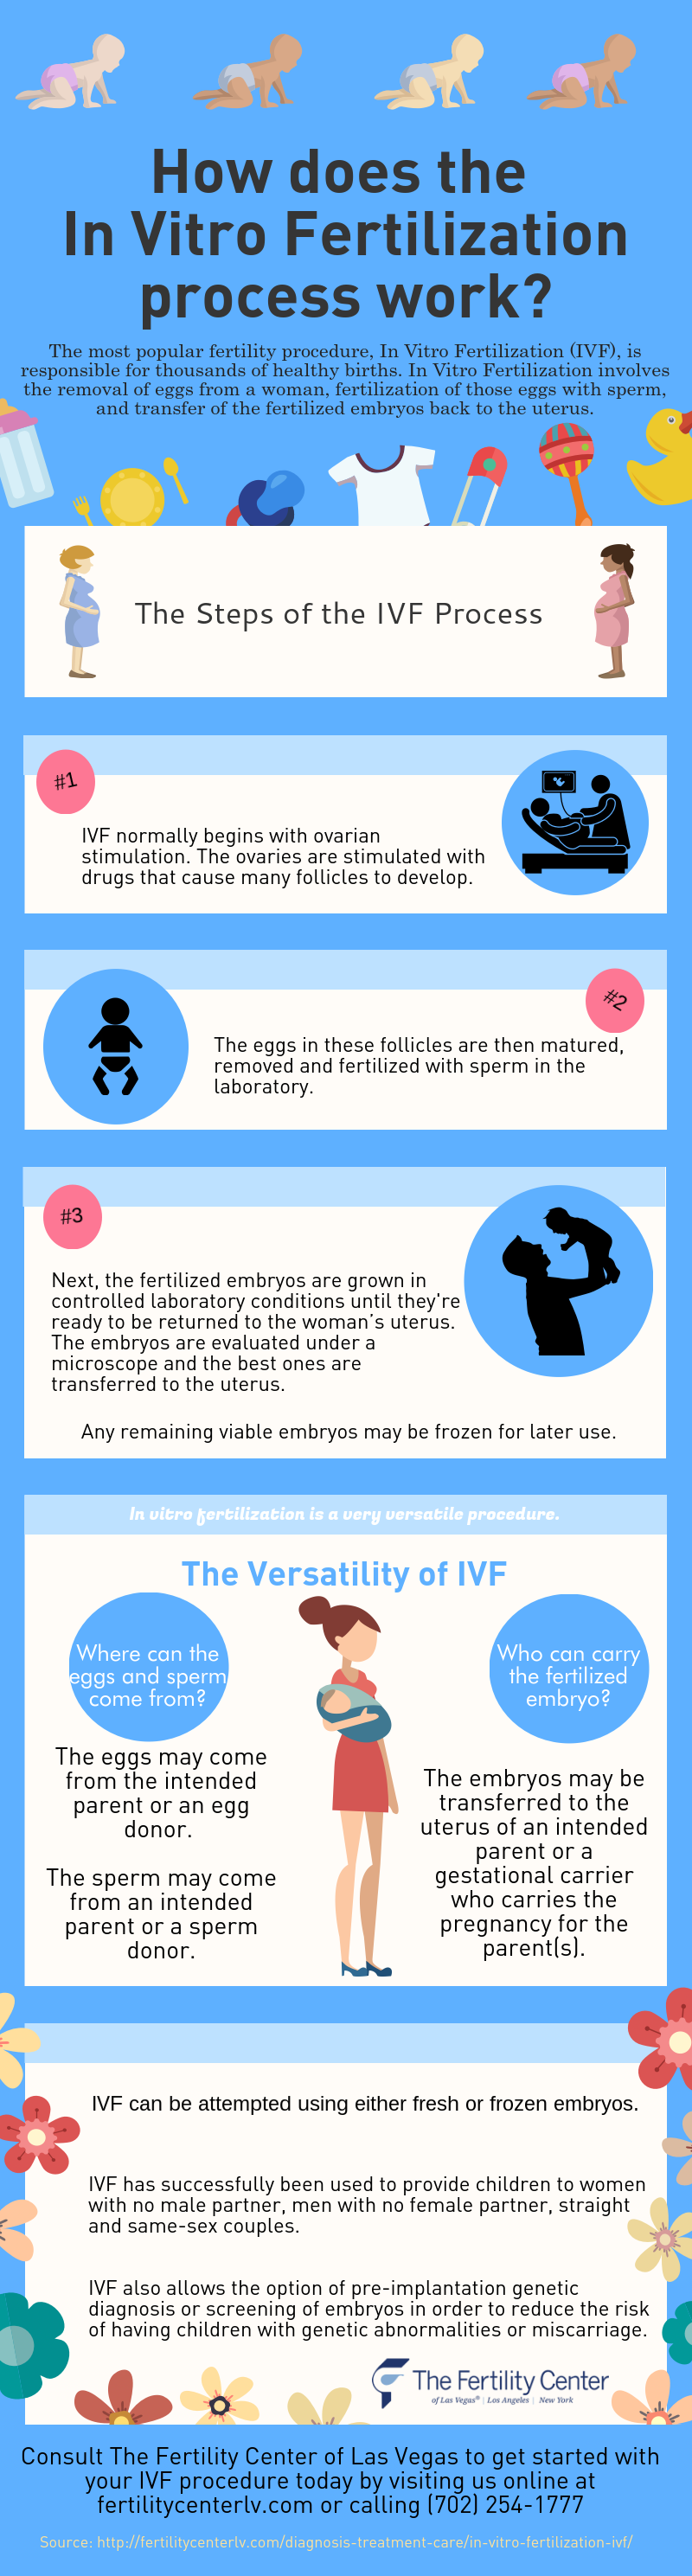 in vitro fertilization explained